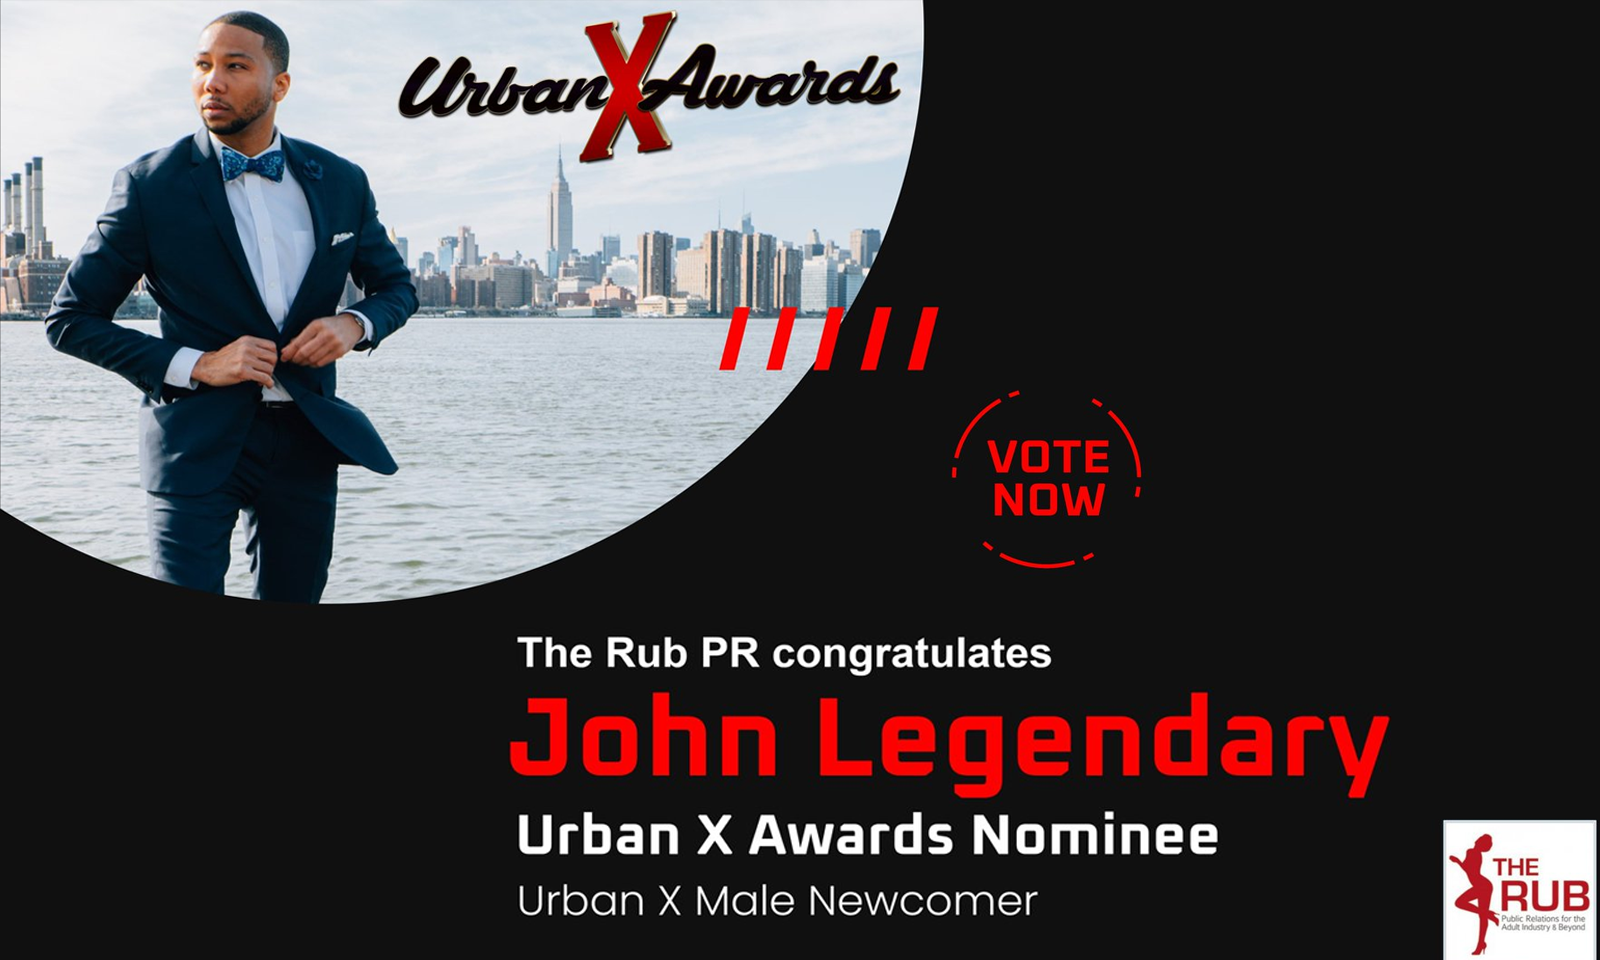 John Legendary Receives First Industry Award Nom From Urban X